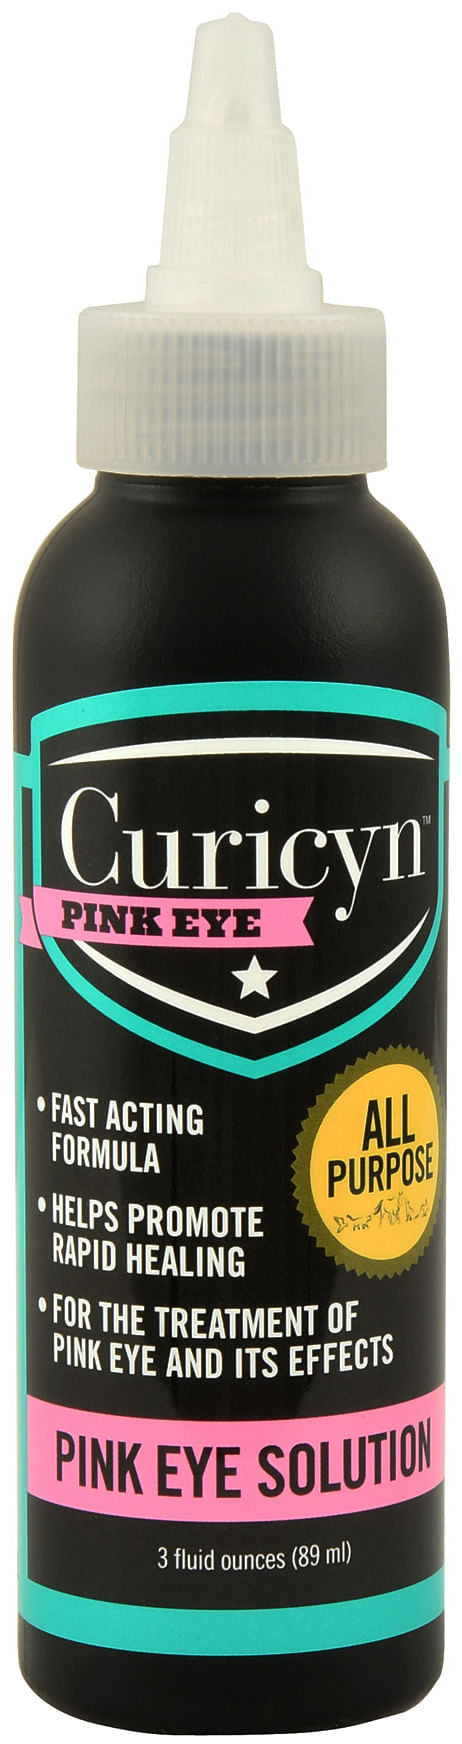 Curicyn Pink Eye Kit & Solution